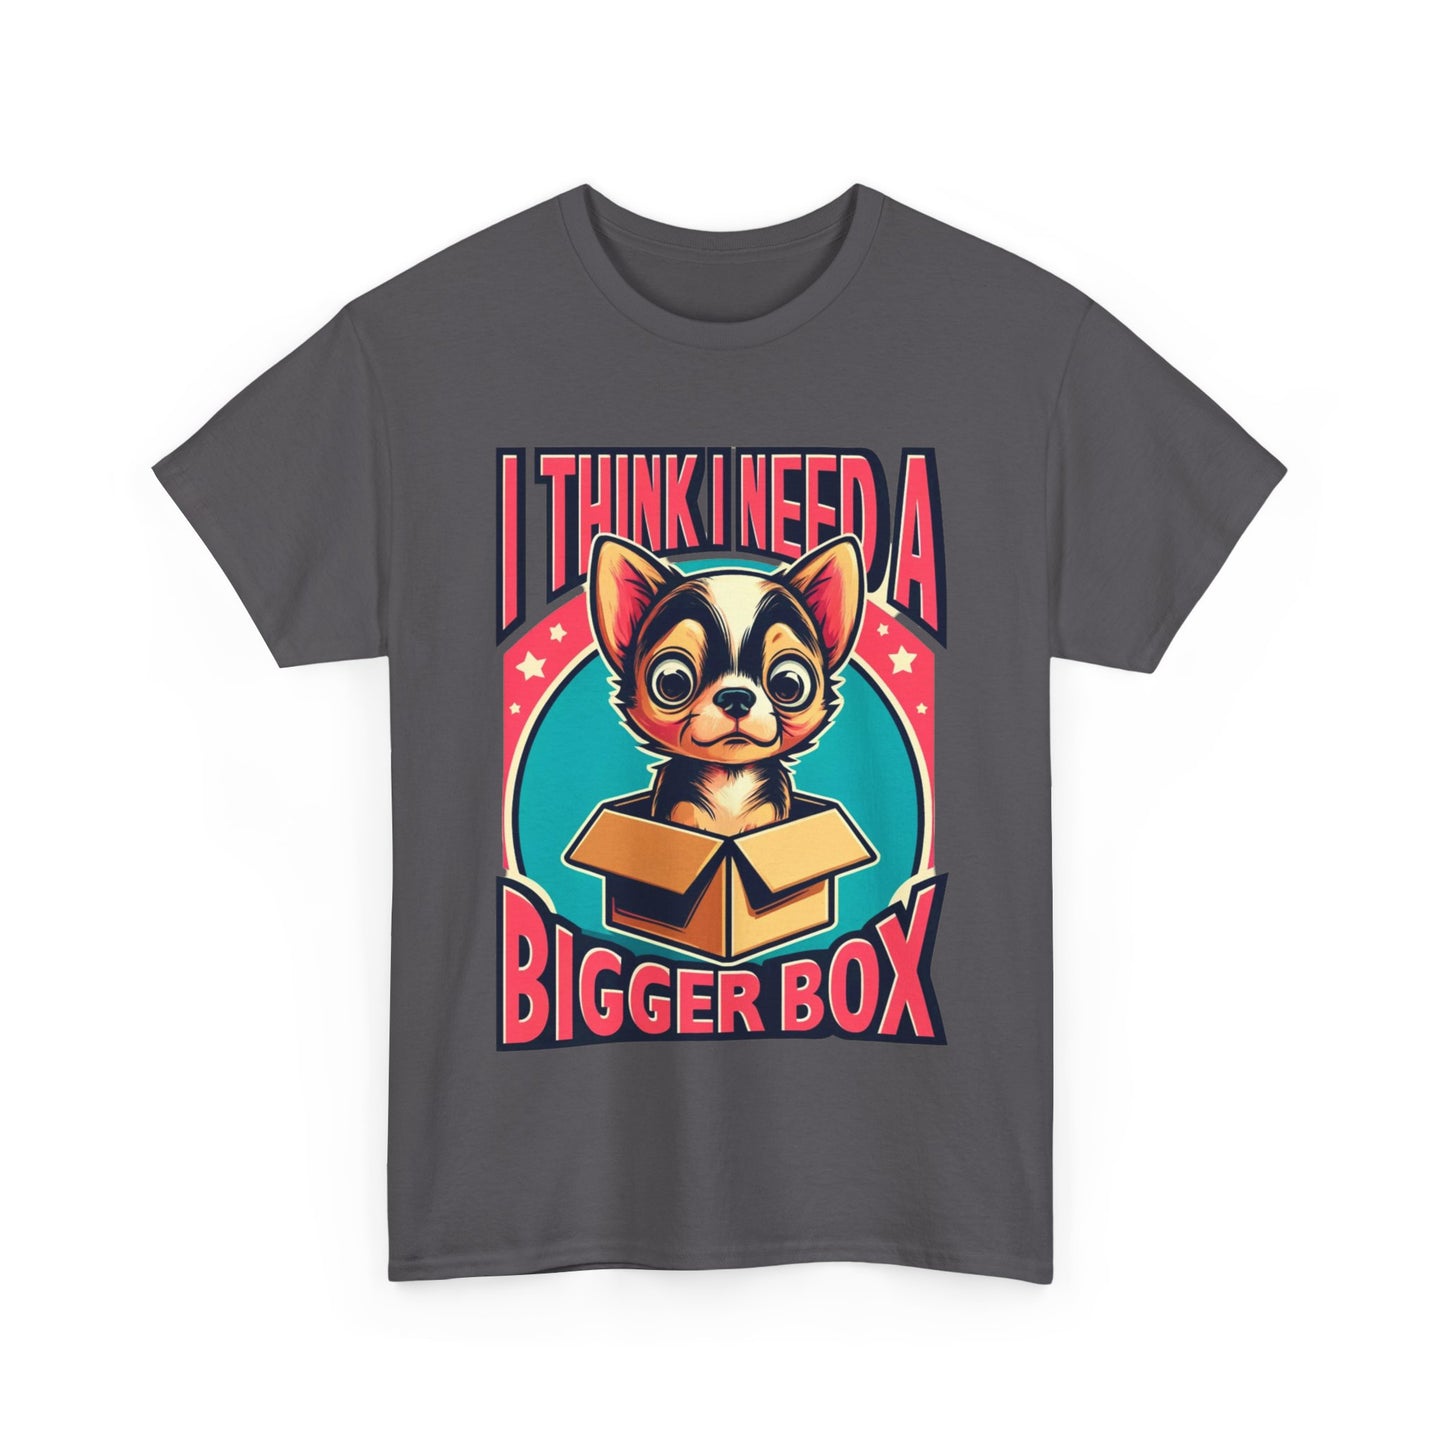 Y.M.L.Y. "I Think I Need A Bigger Box" Chihuahua T-Shirts Chihuahua Lover T-Shirts Funny Chihuahua T-Shirts